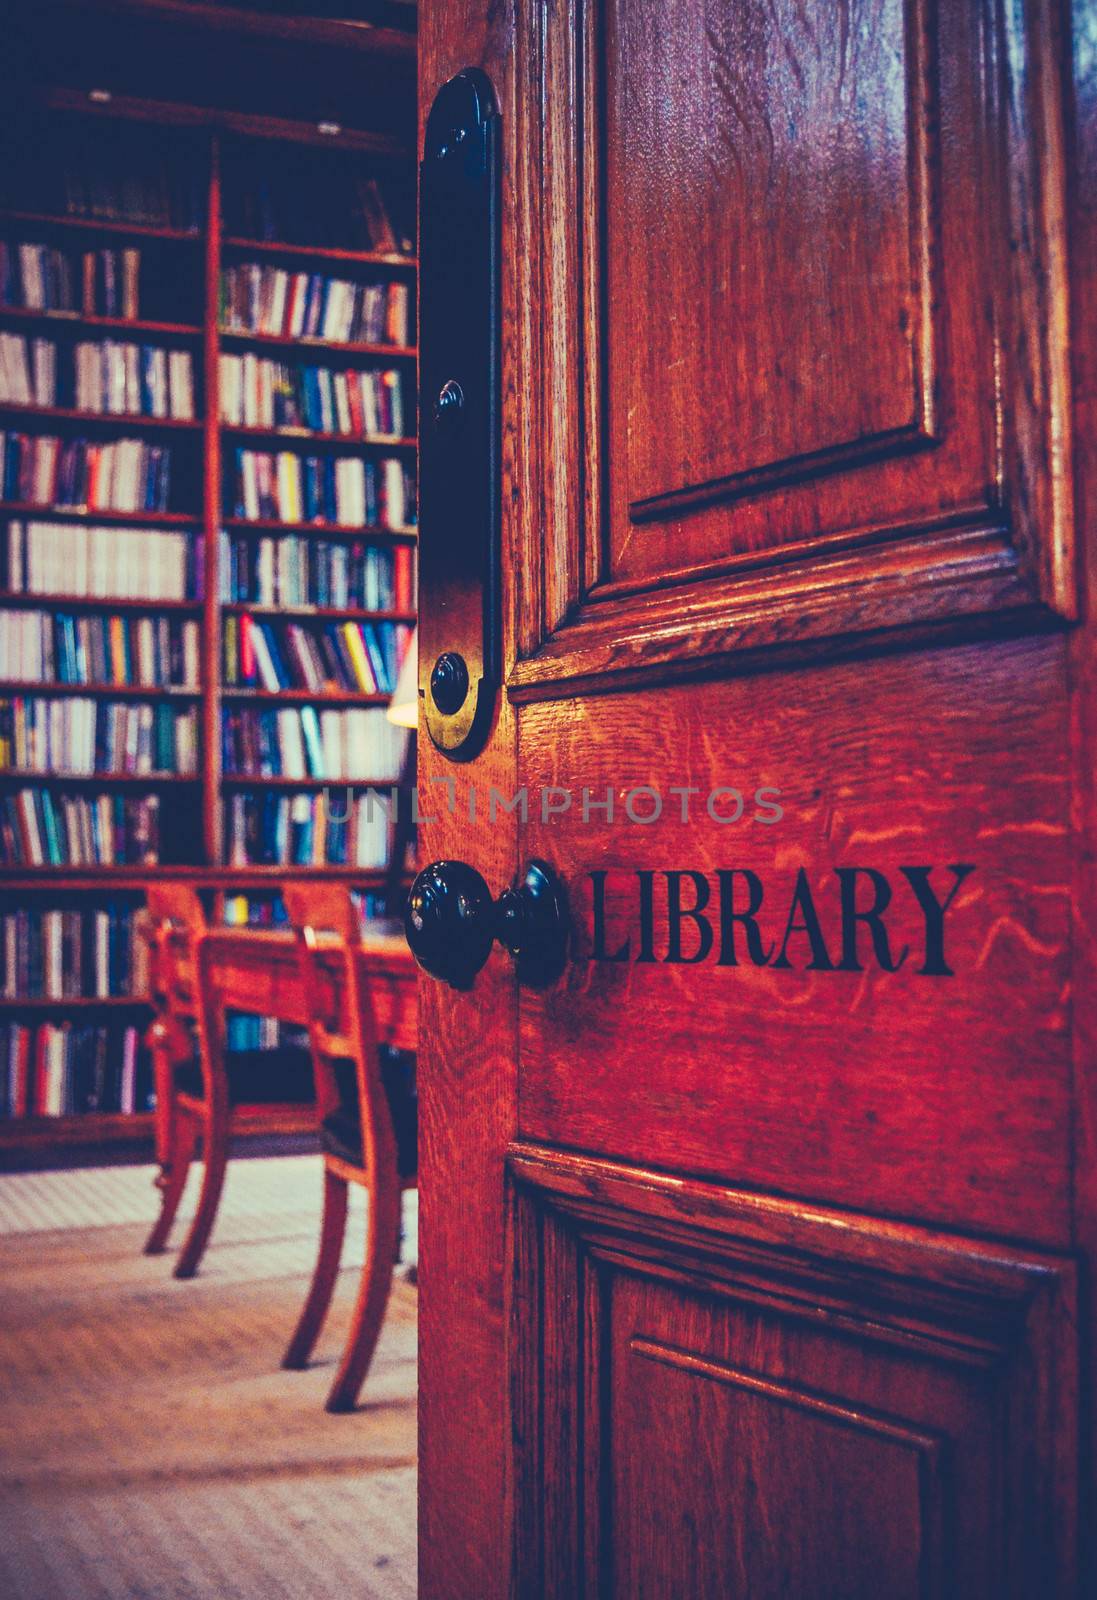 Prestigious University Library by mrdoomits